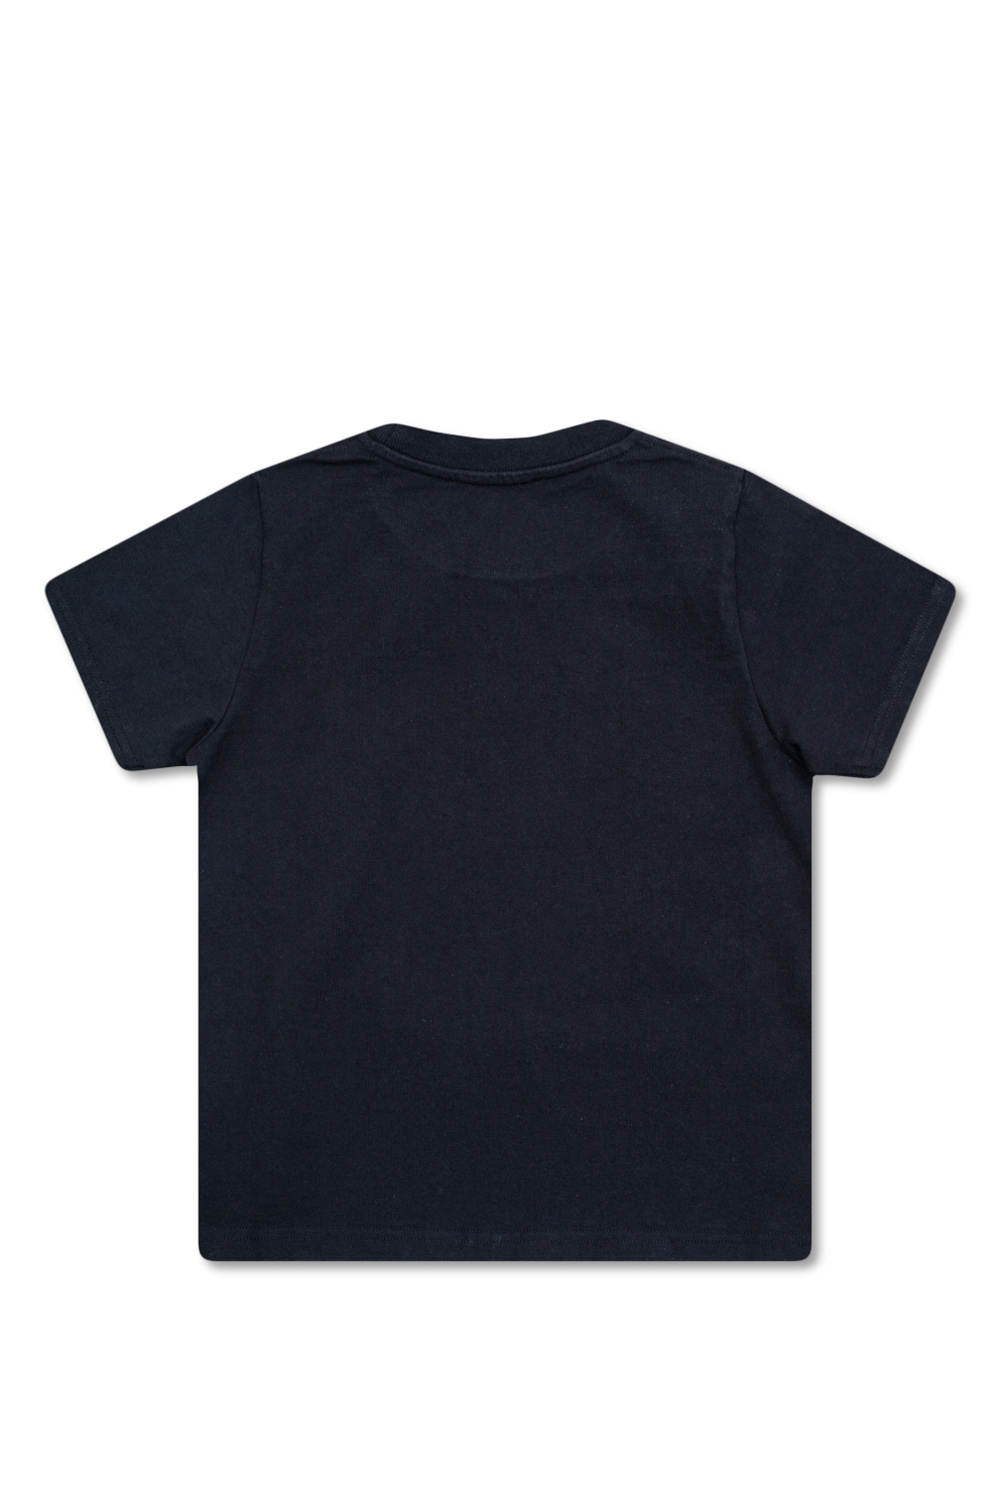 Derbe Pullover navy Printed T-shirt